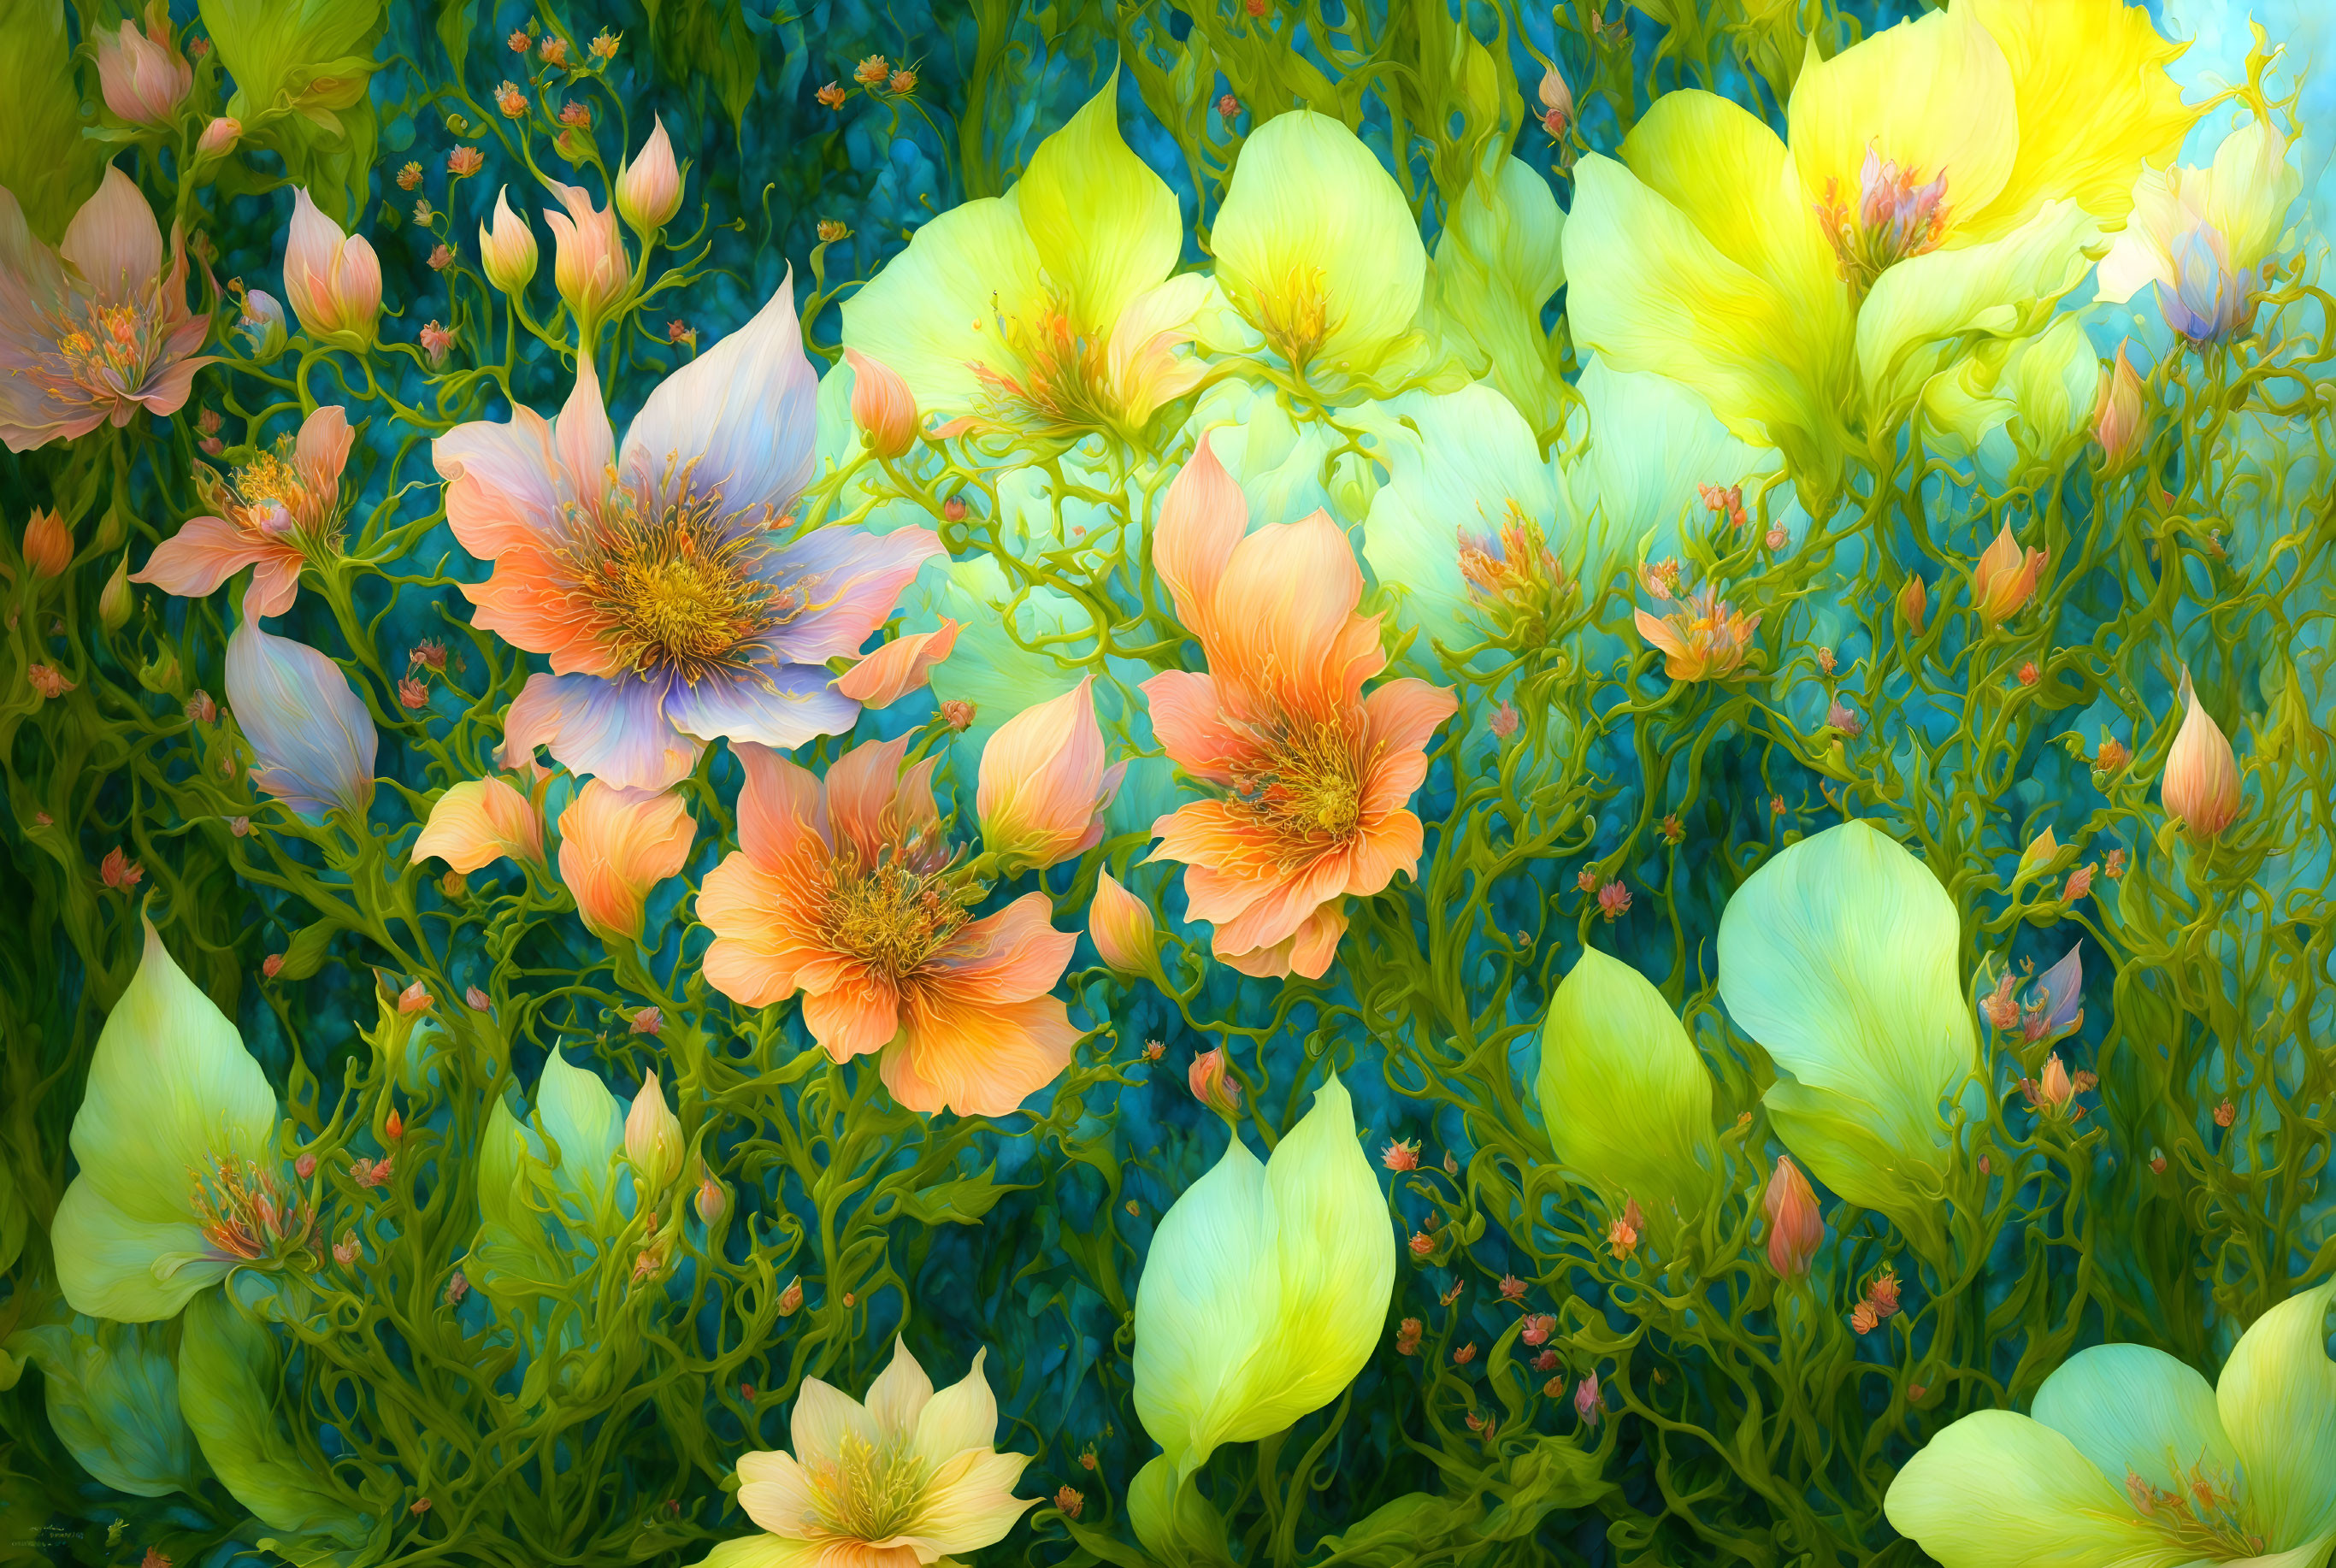 Delicate pastel flowers in lush digital painting